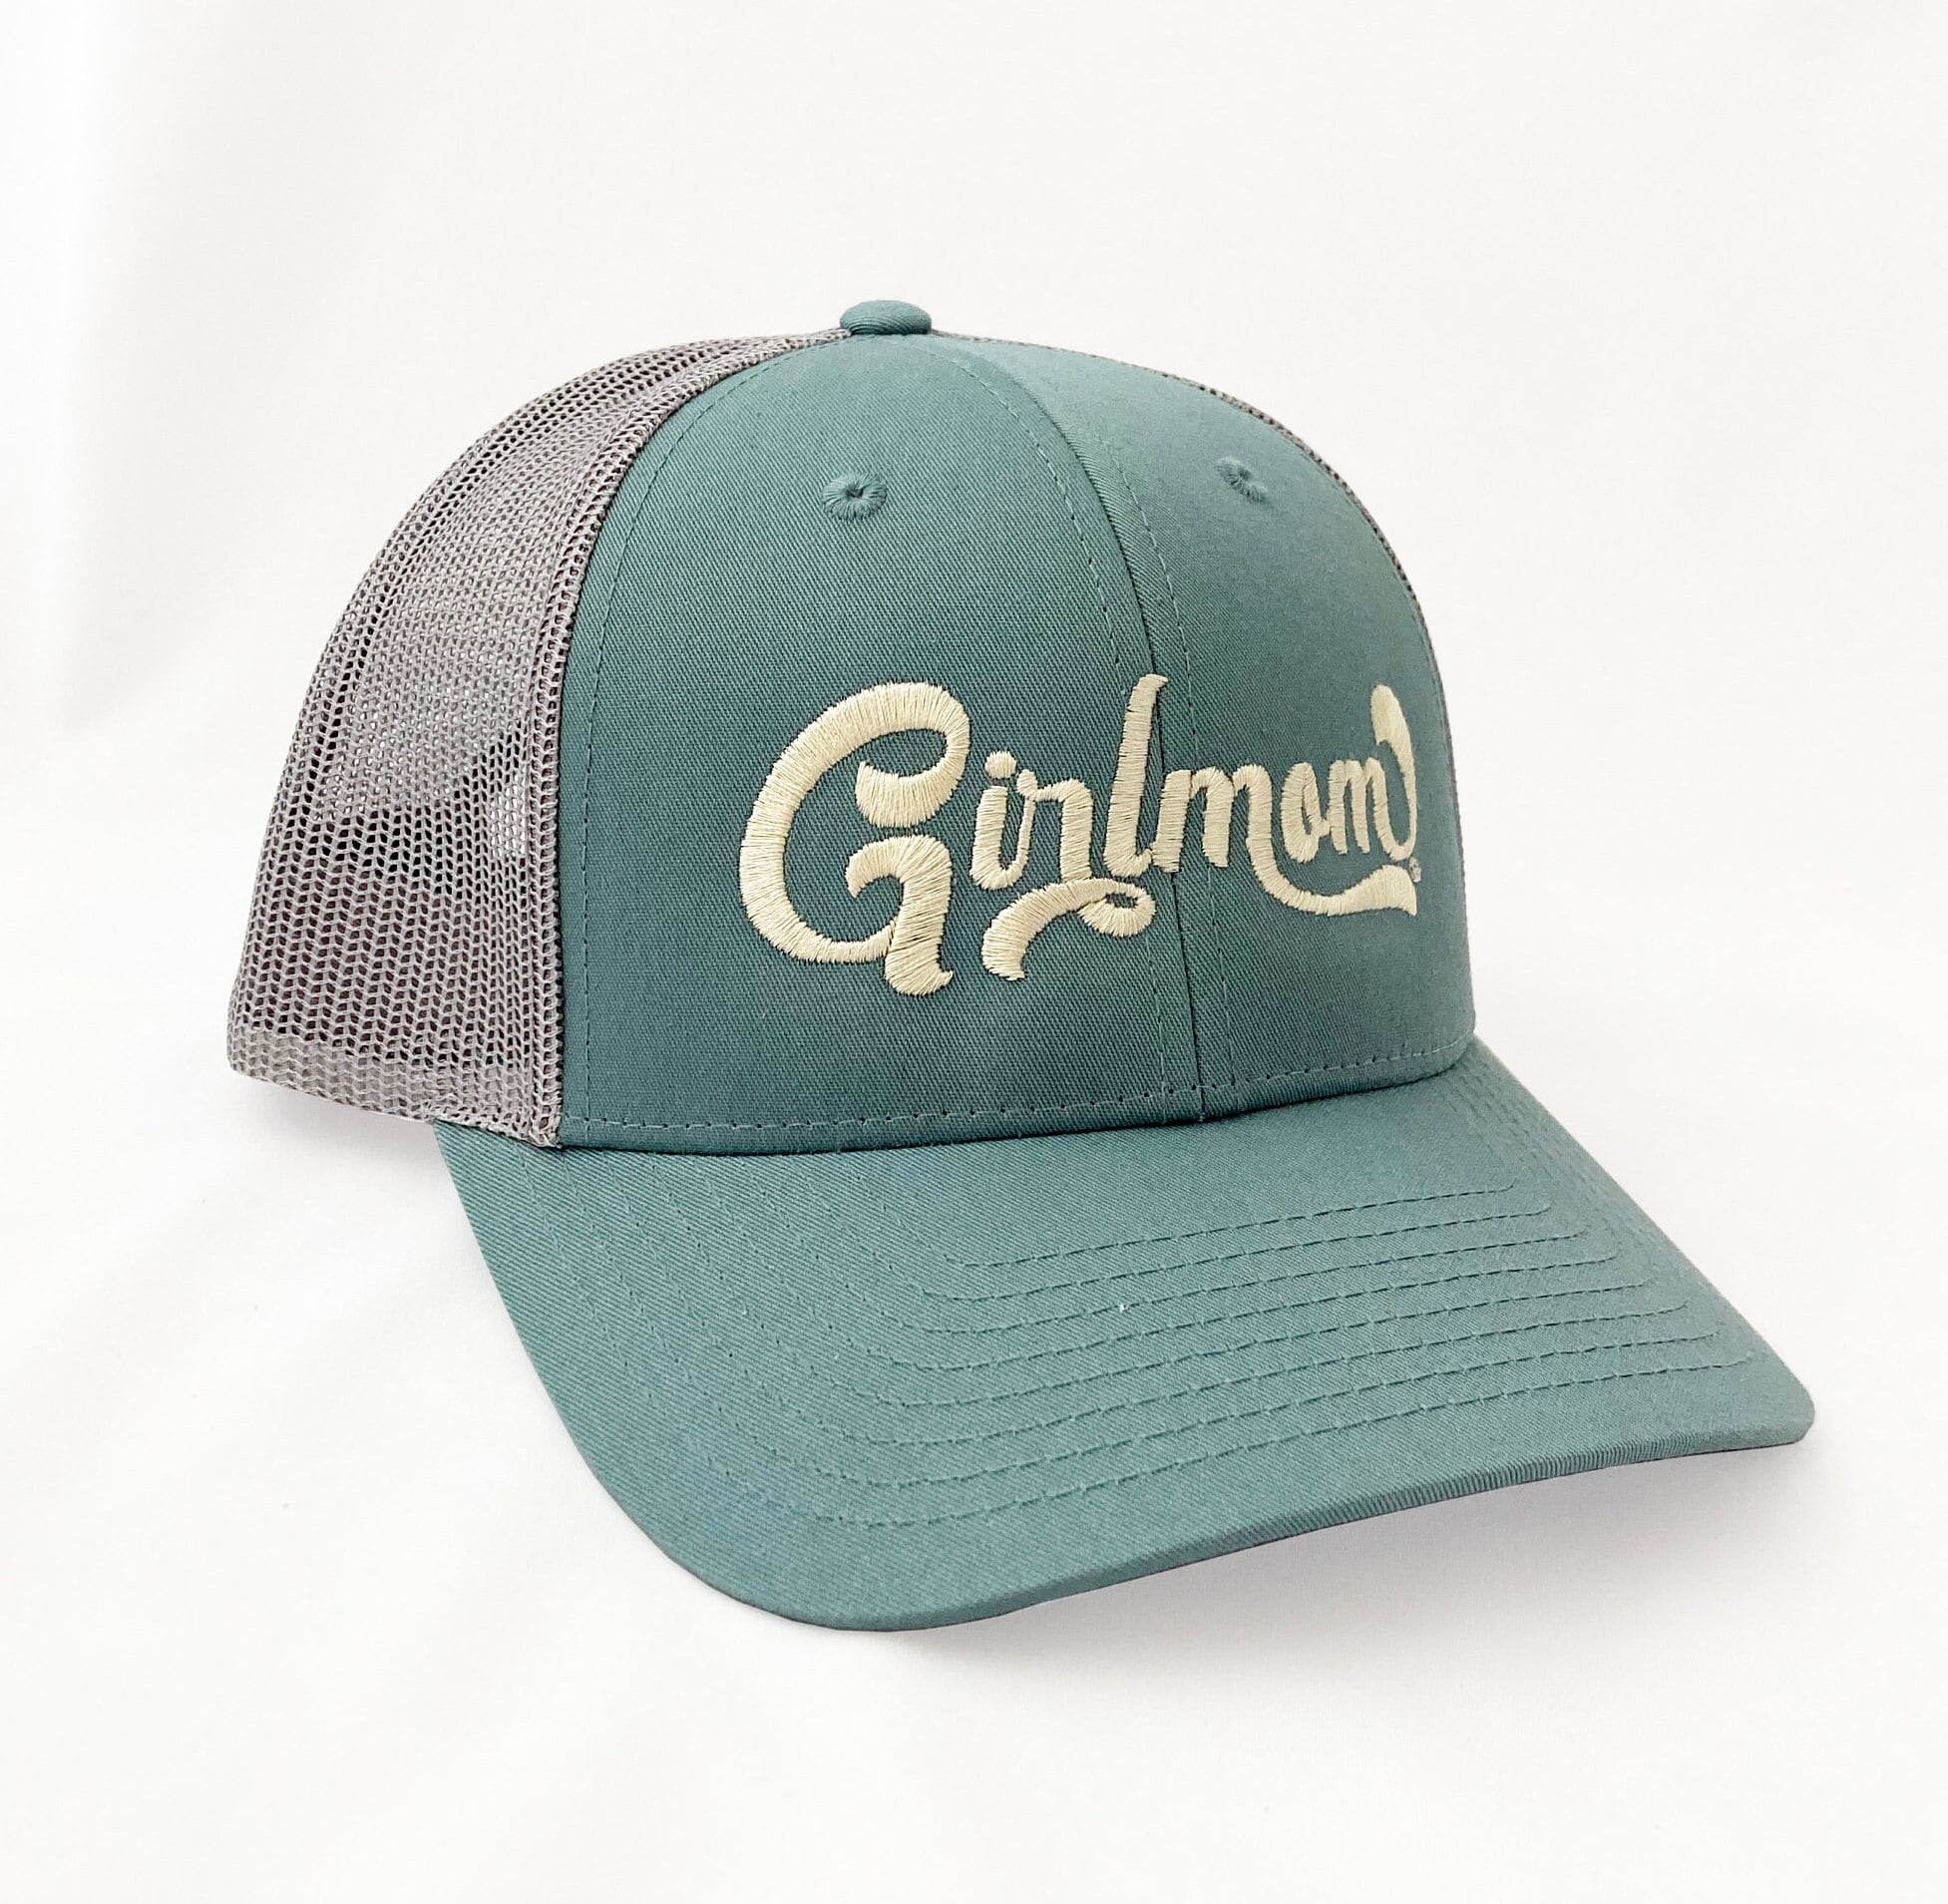 Girlmom® Retro Low Profile Trucker Cap